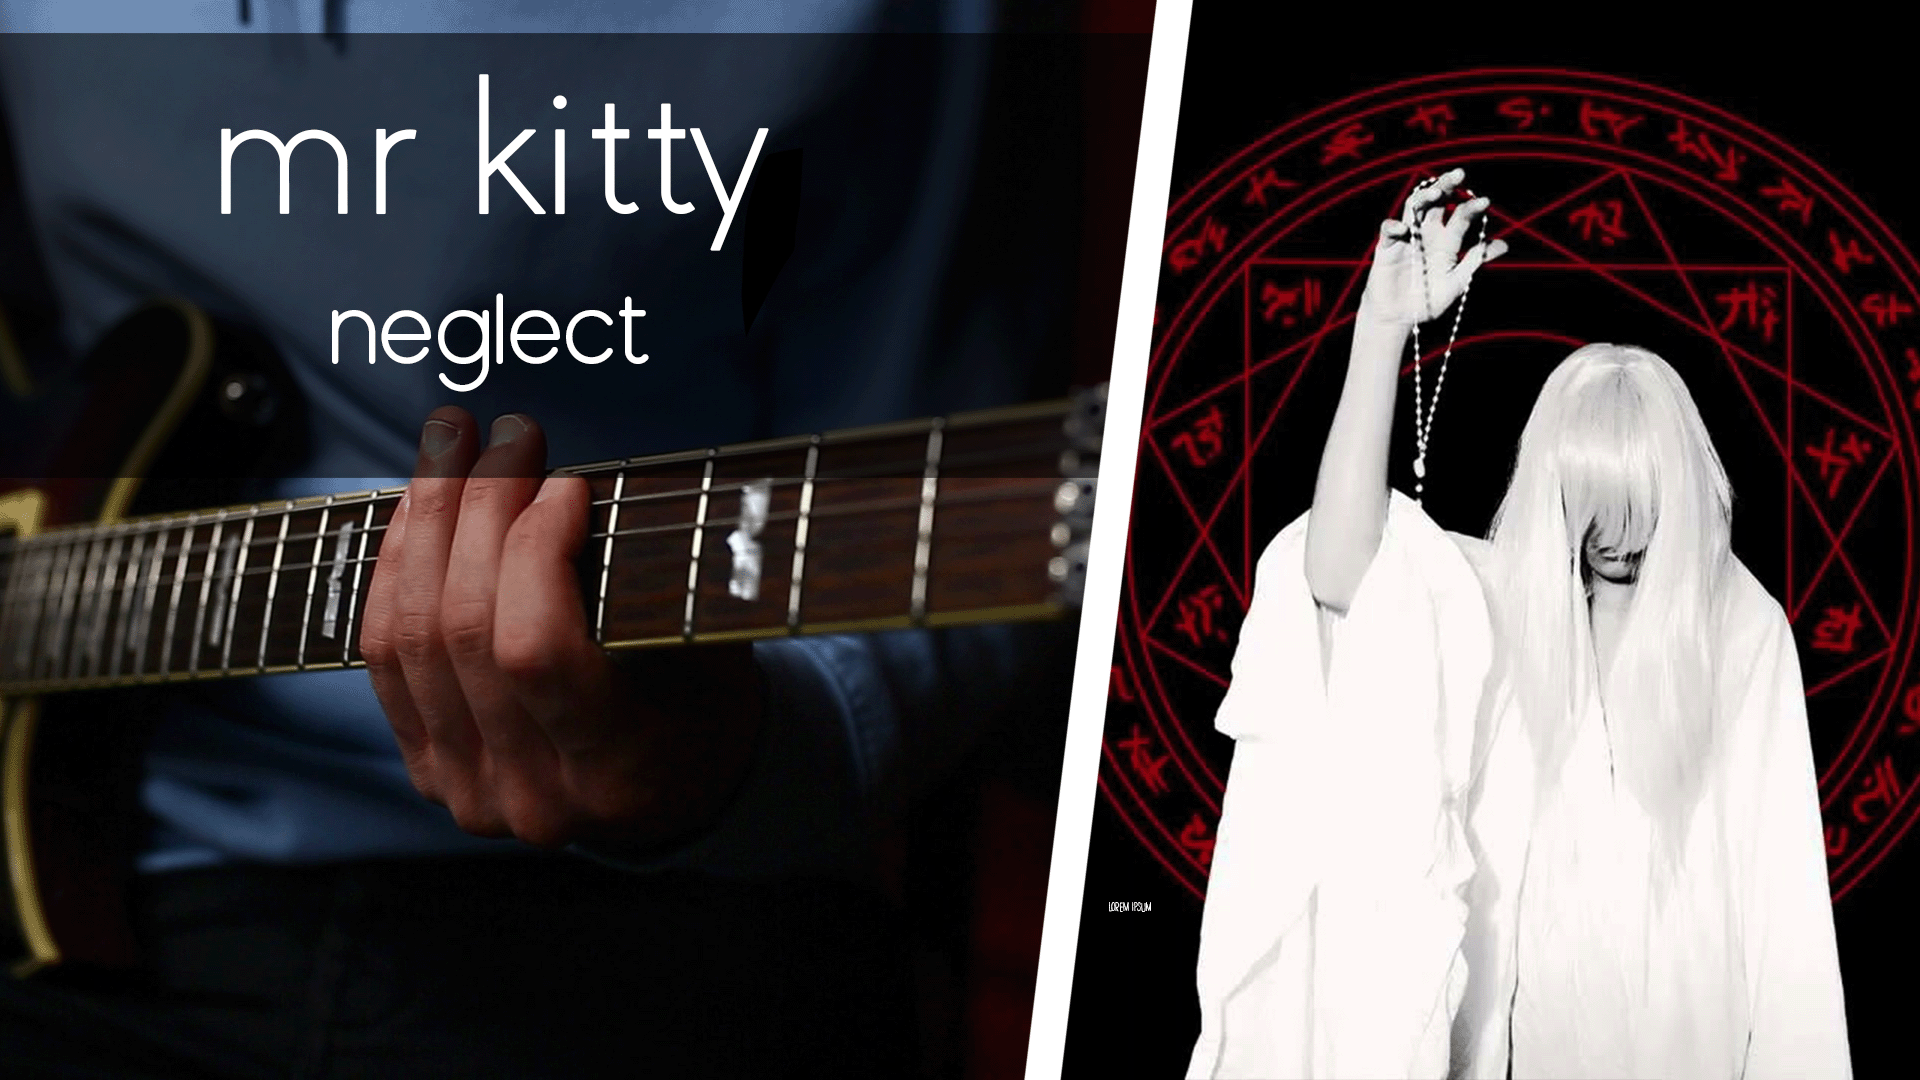 Mr kitty habits. Mr Kitty. Mr Kitty neglect. Mr.Kitty музыкант. Neglect Mr.Kitty обложка.